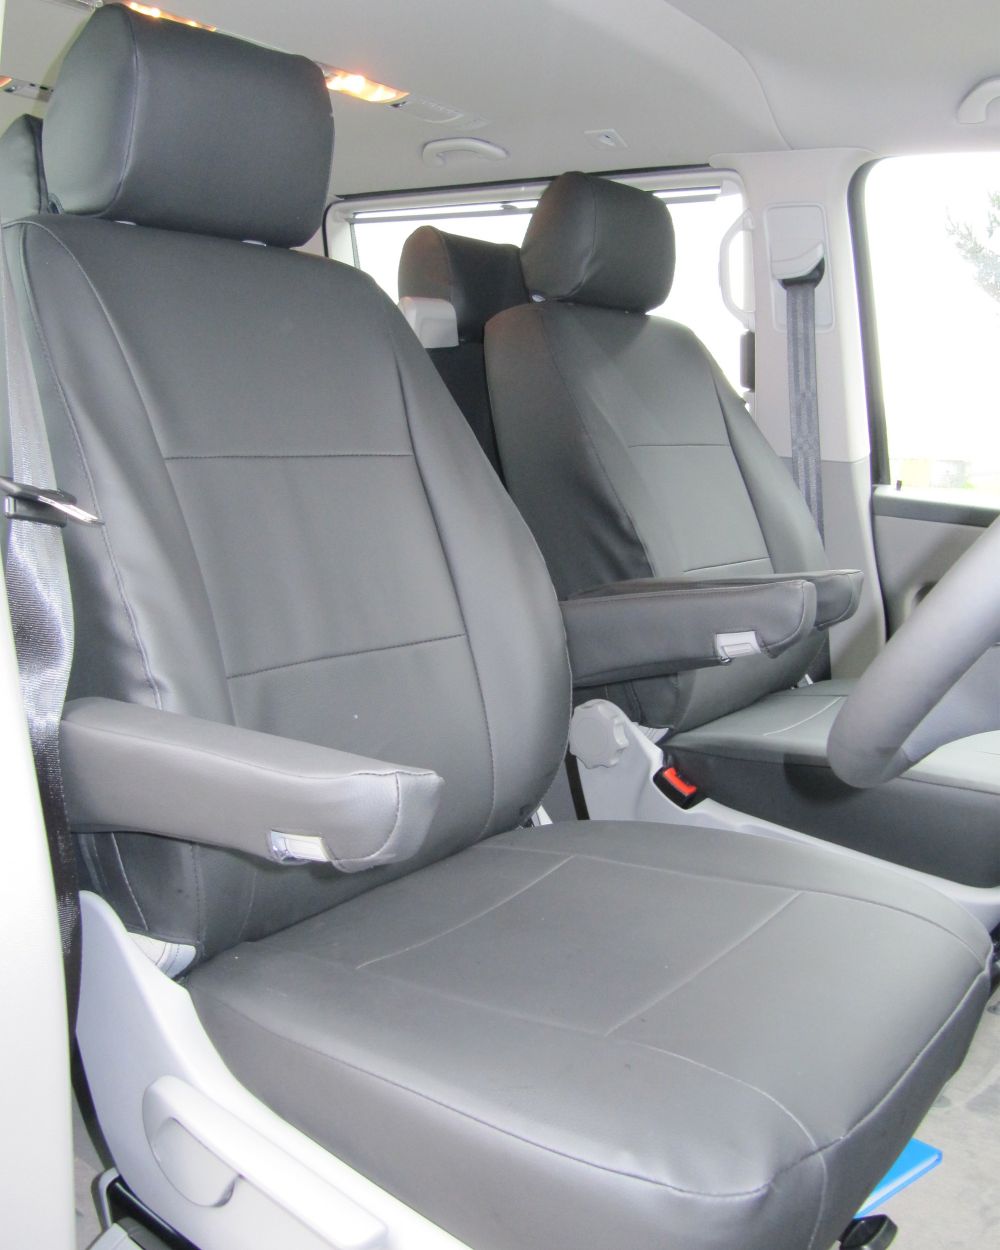 GREY FRONT CAR SEAT COVERS HIGH QUALITY ELEGANT JACQUARD RENAULT KANGOO